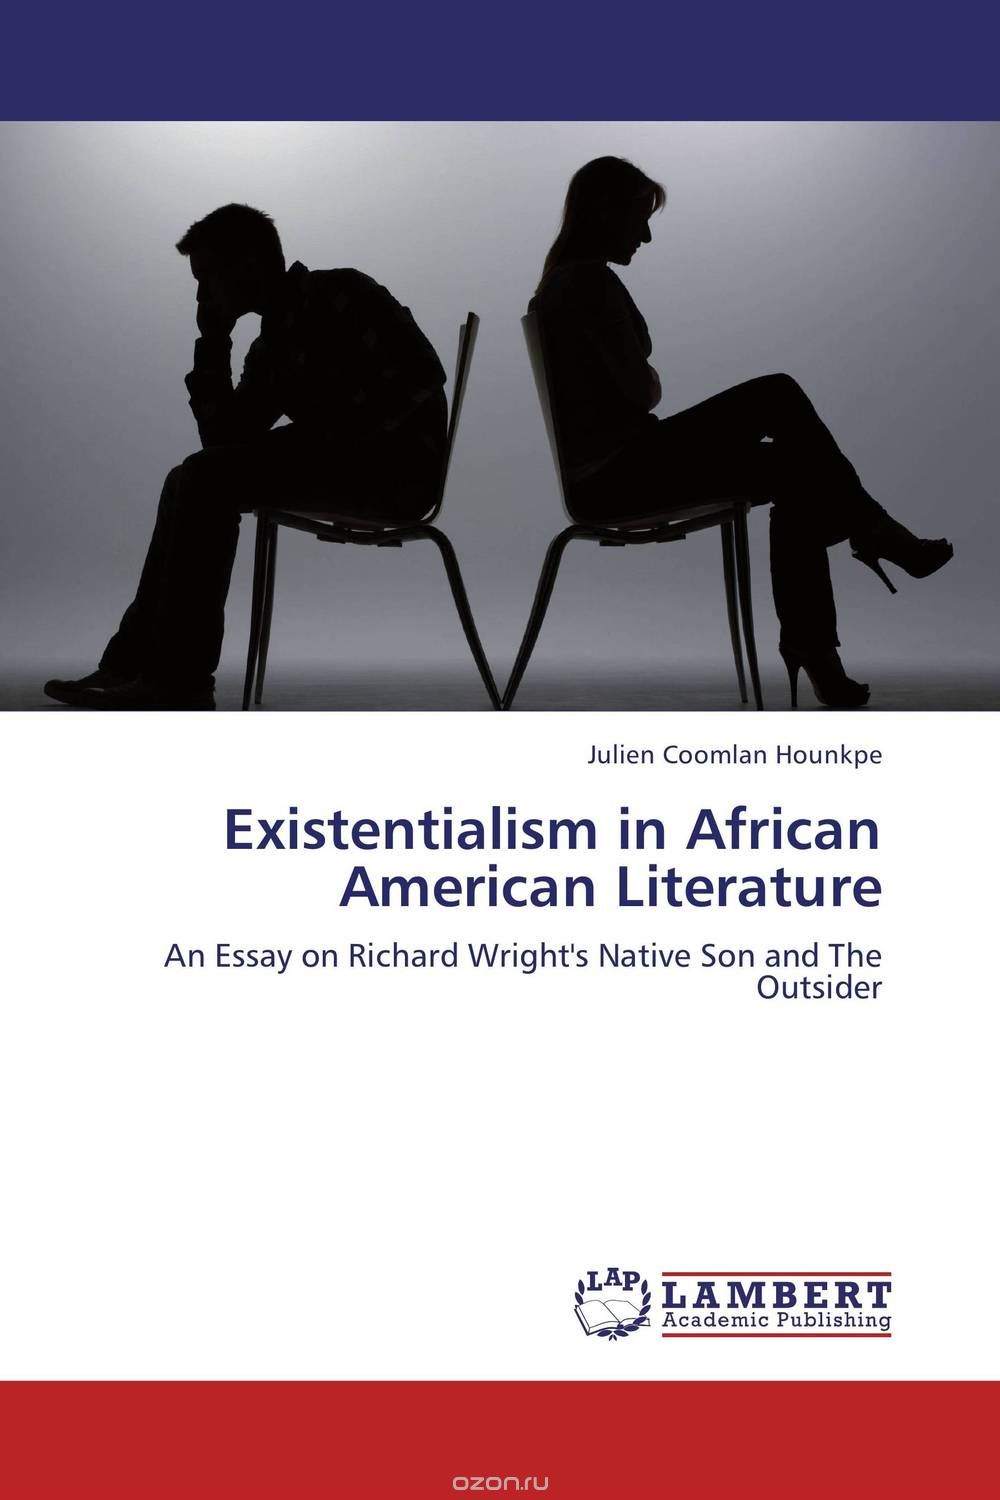 Скачать книгу "Existentialism in African American Literature"